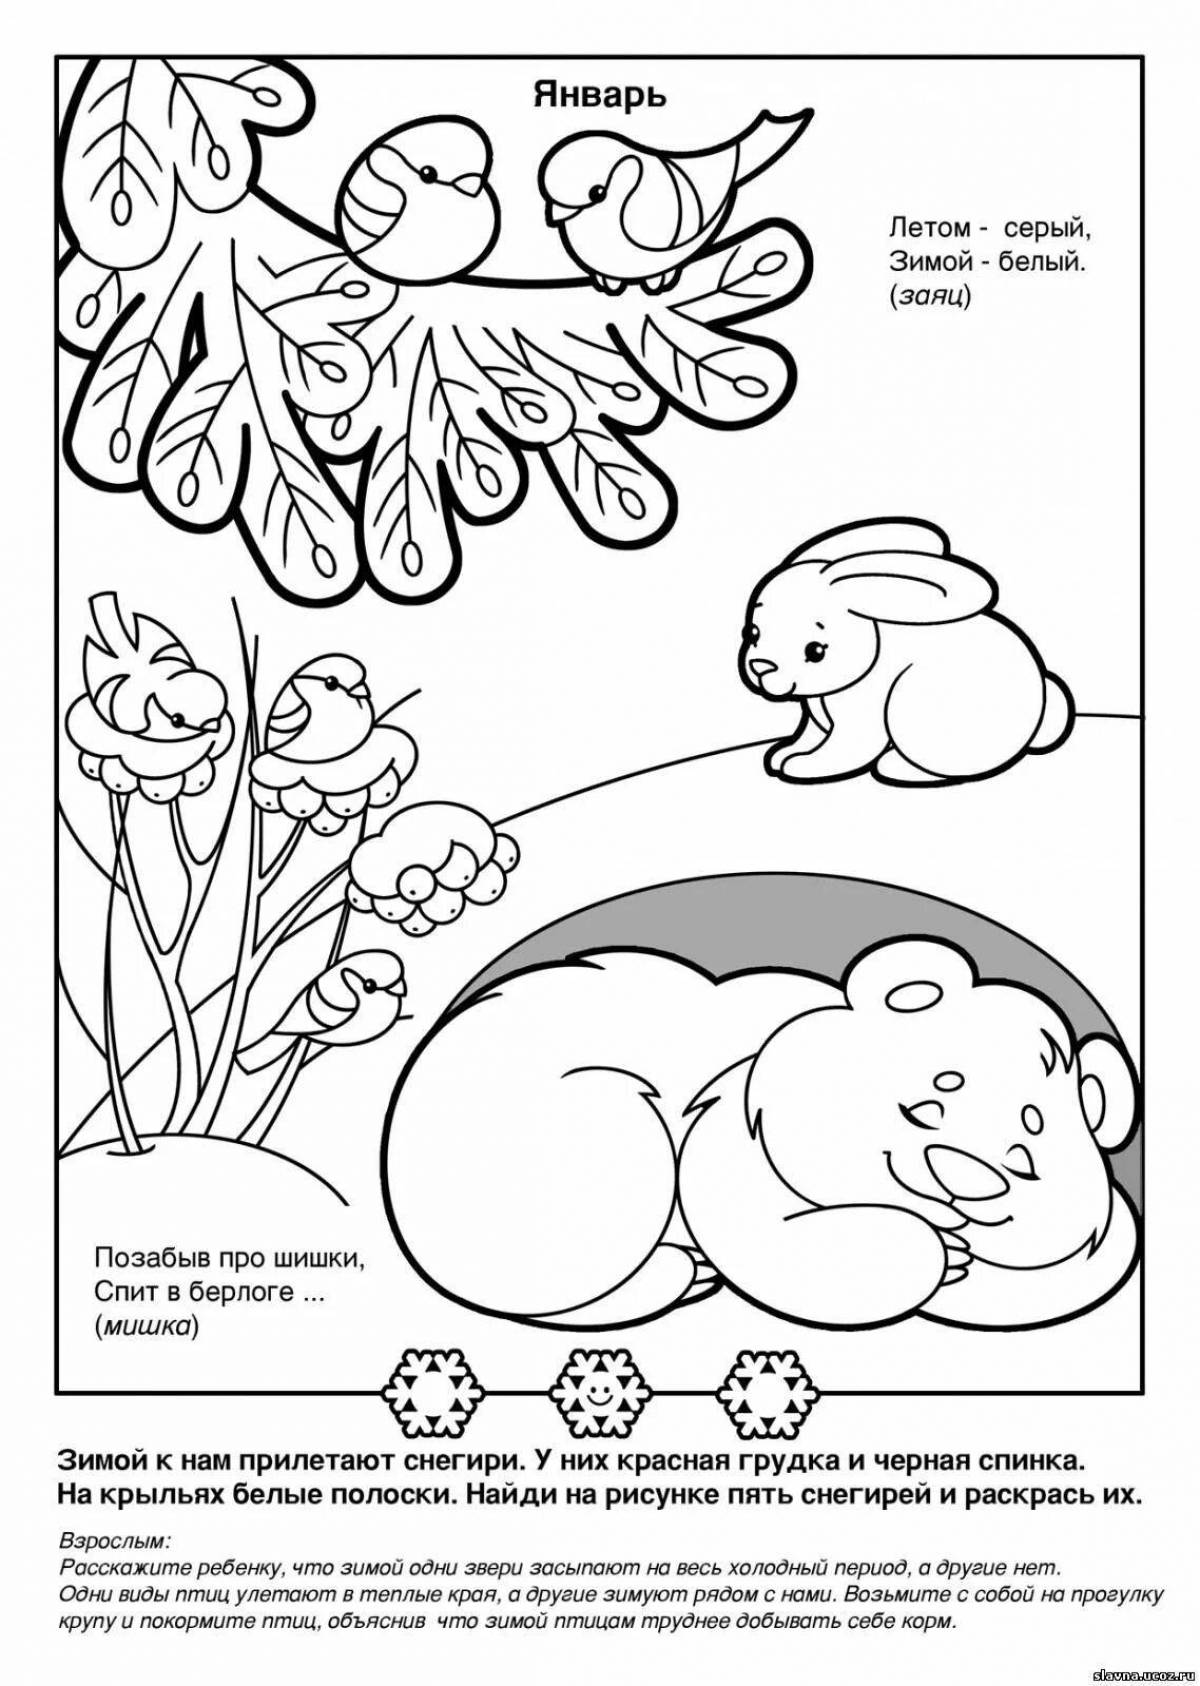 Serene coloring page: почему медведи спят зимой?